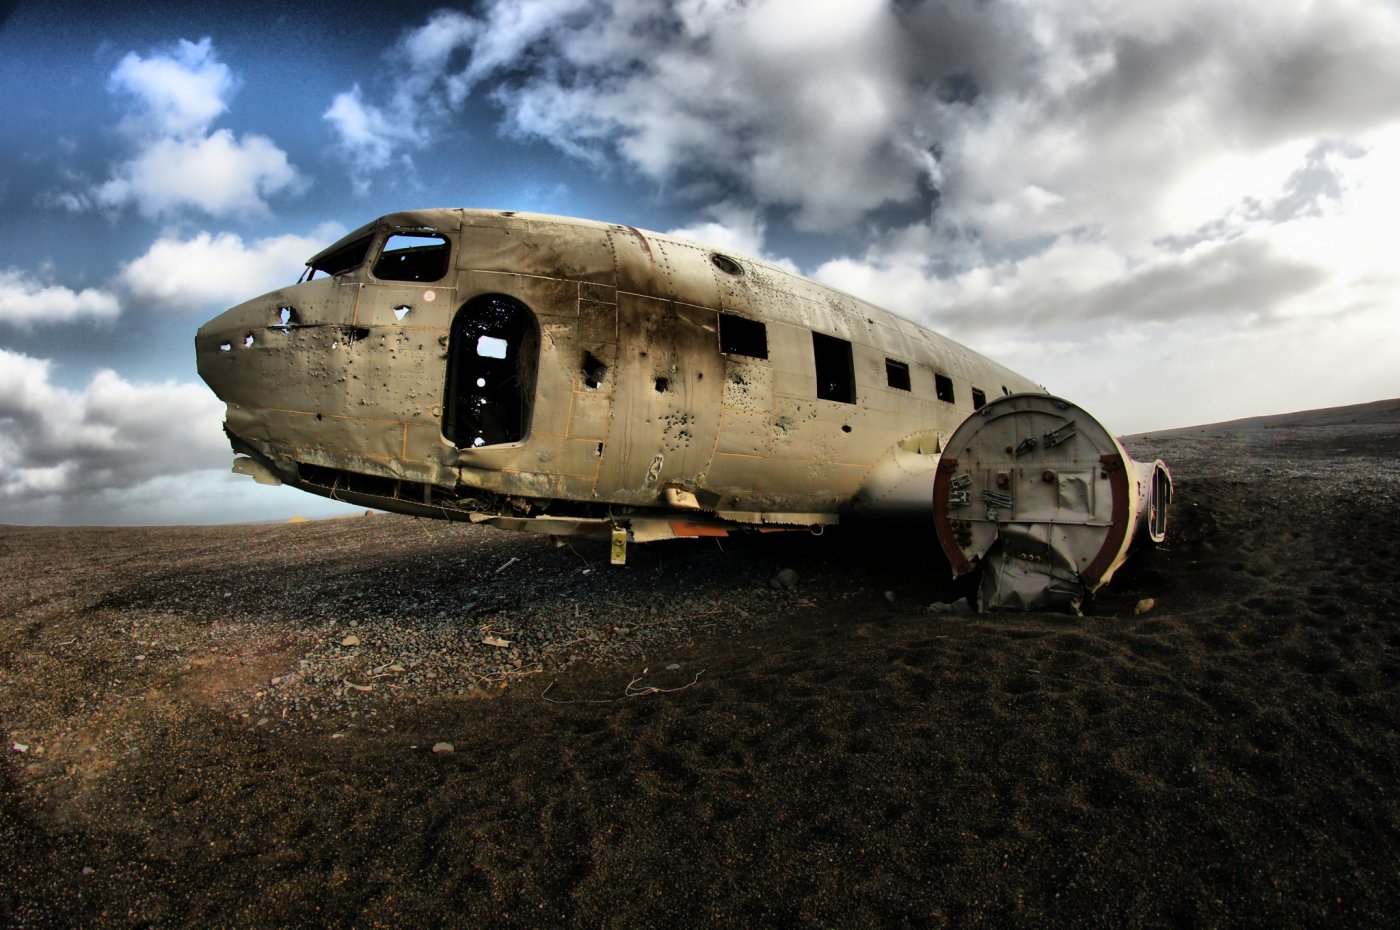    Douglas DC-3. , , Path to Wrecked DC-3 Plane on Solheimasandur